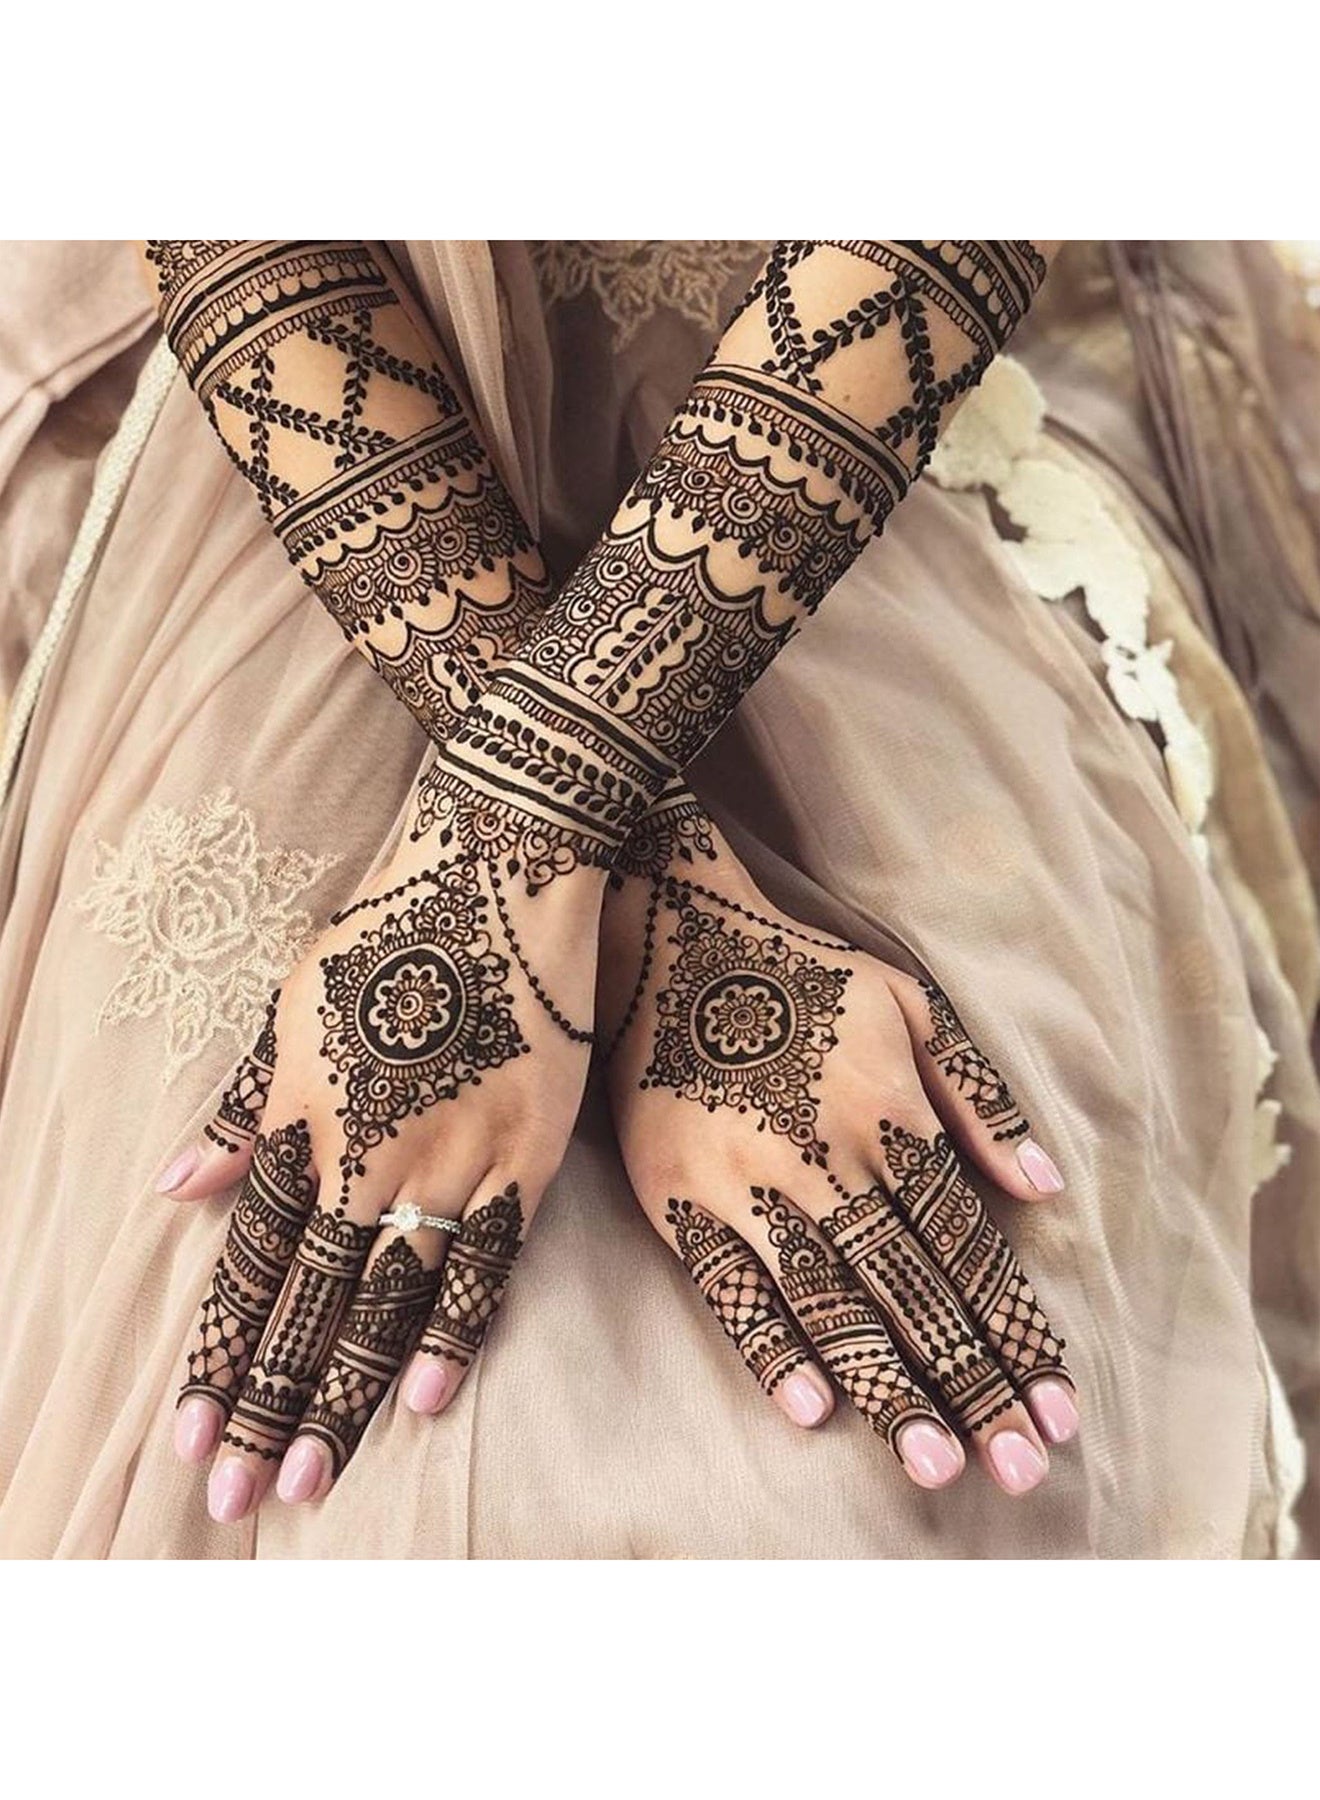 🌸Organic henna cones 🌸